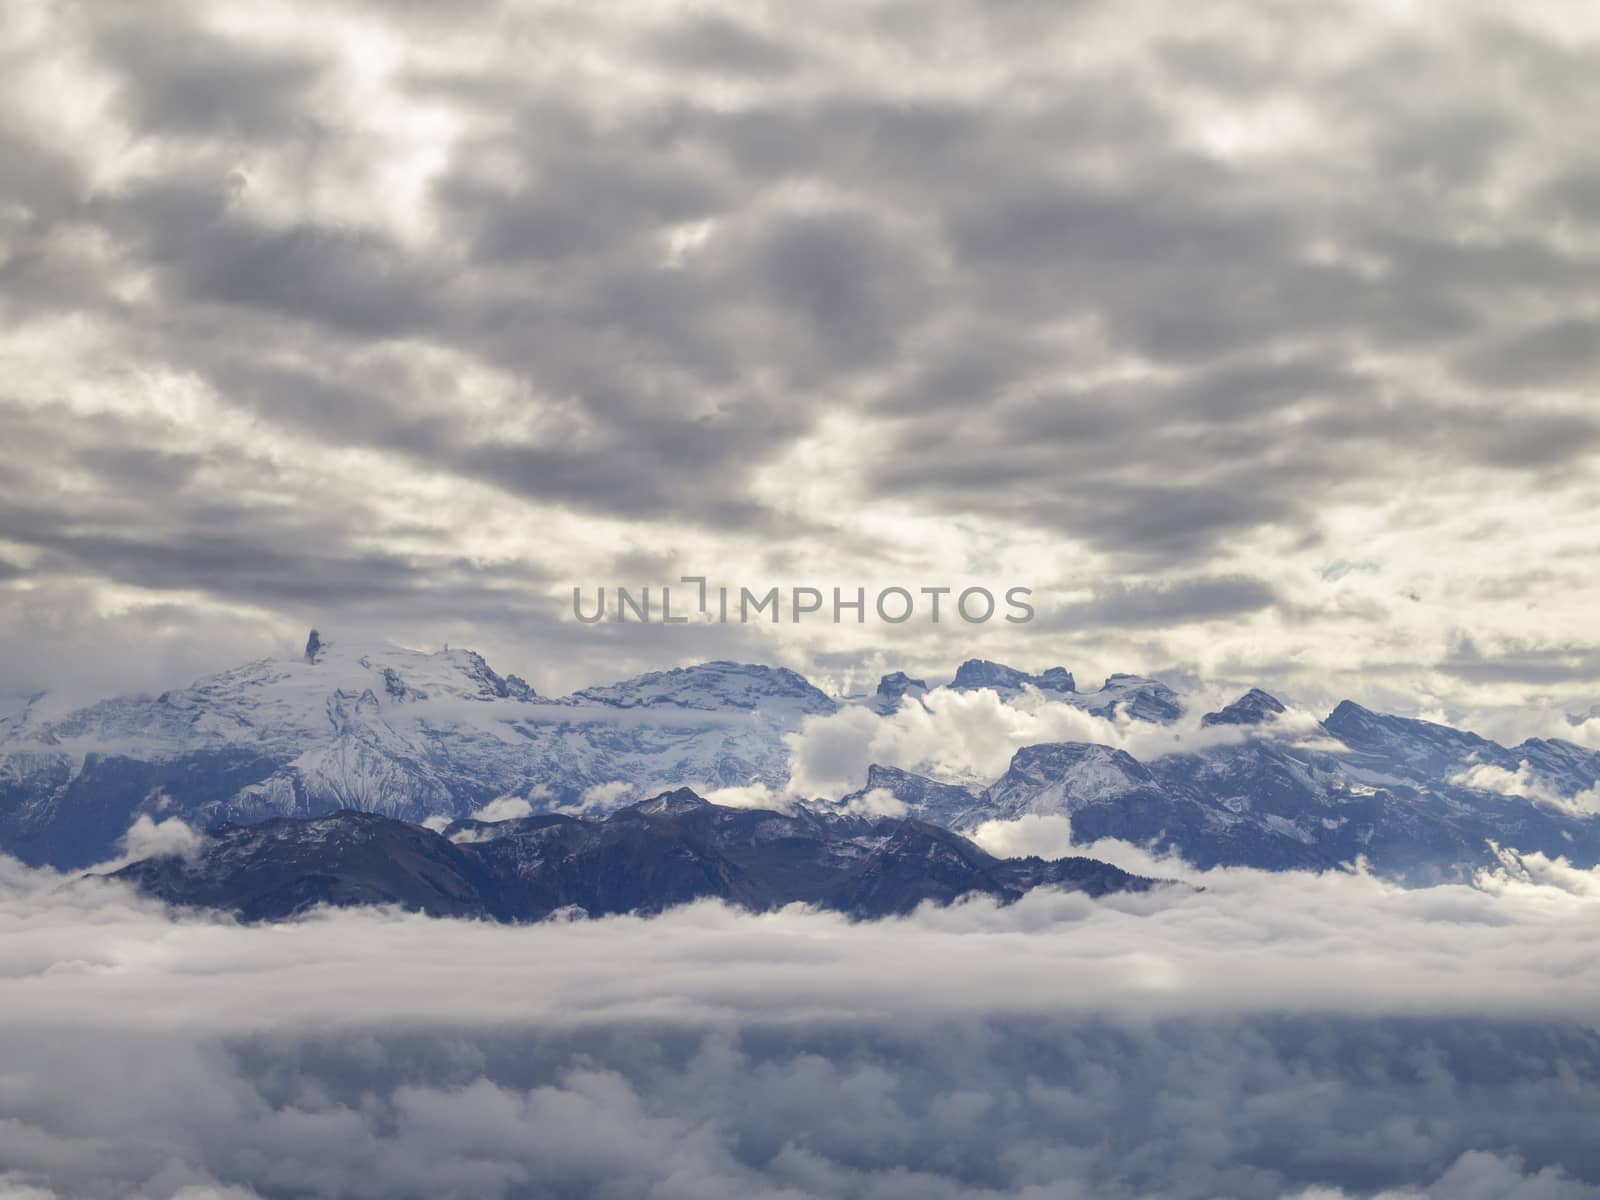 Beautiful Swiss Alps viewed from Mount Pilatus in Switzerland.